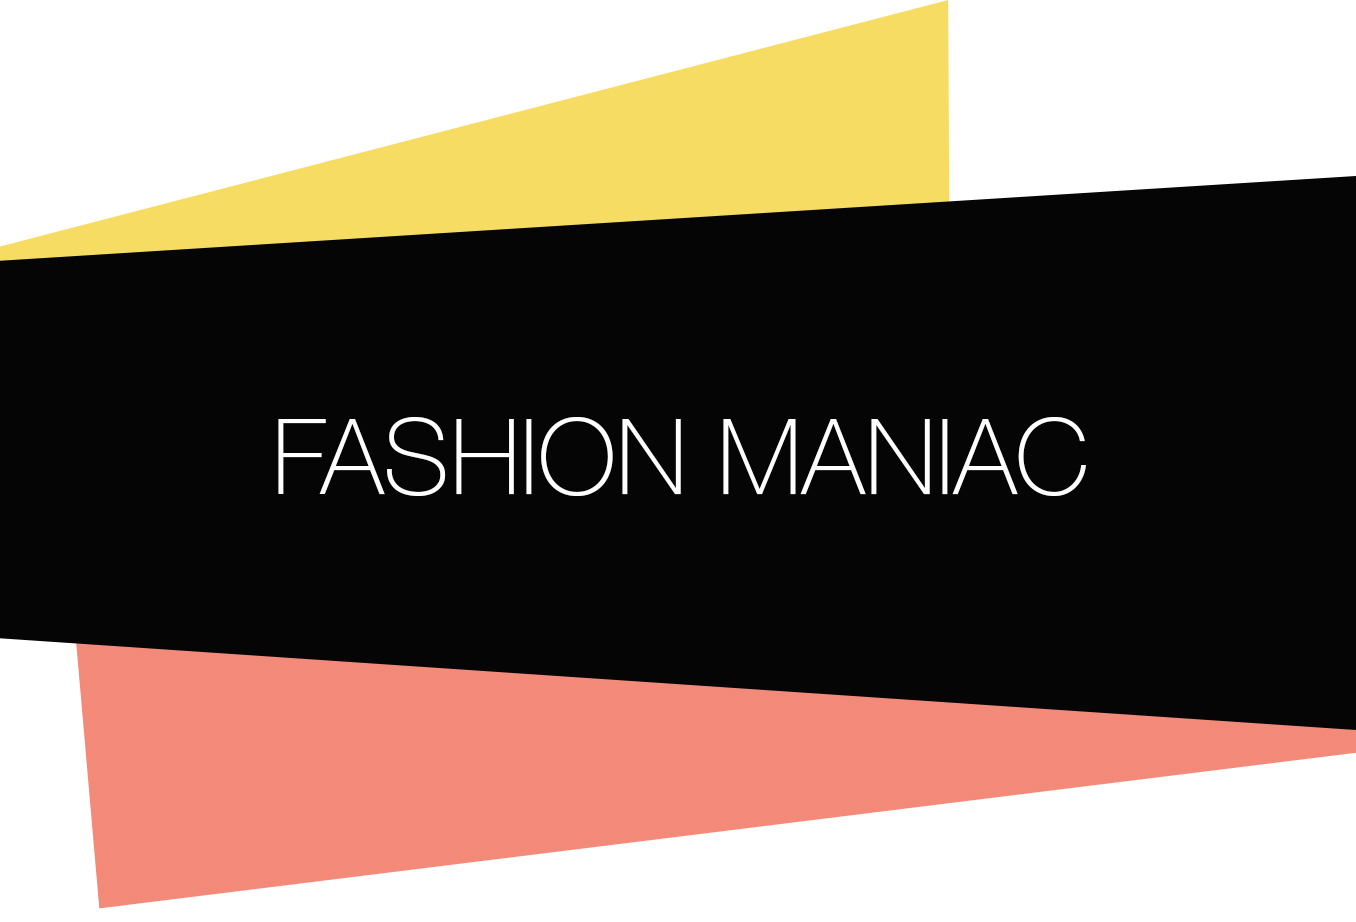 Fashion Maniac: NYFW Through The Eyes of a Fashion Illustrator